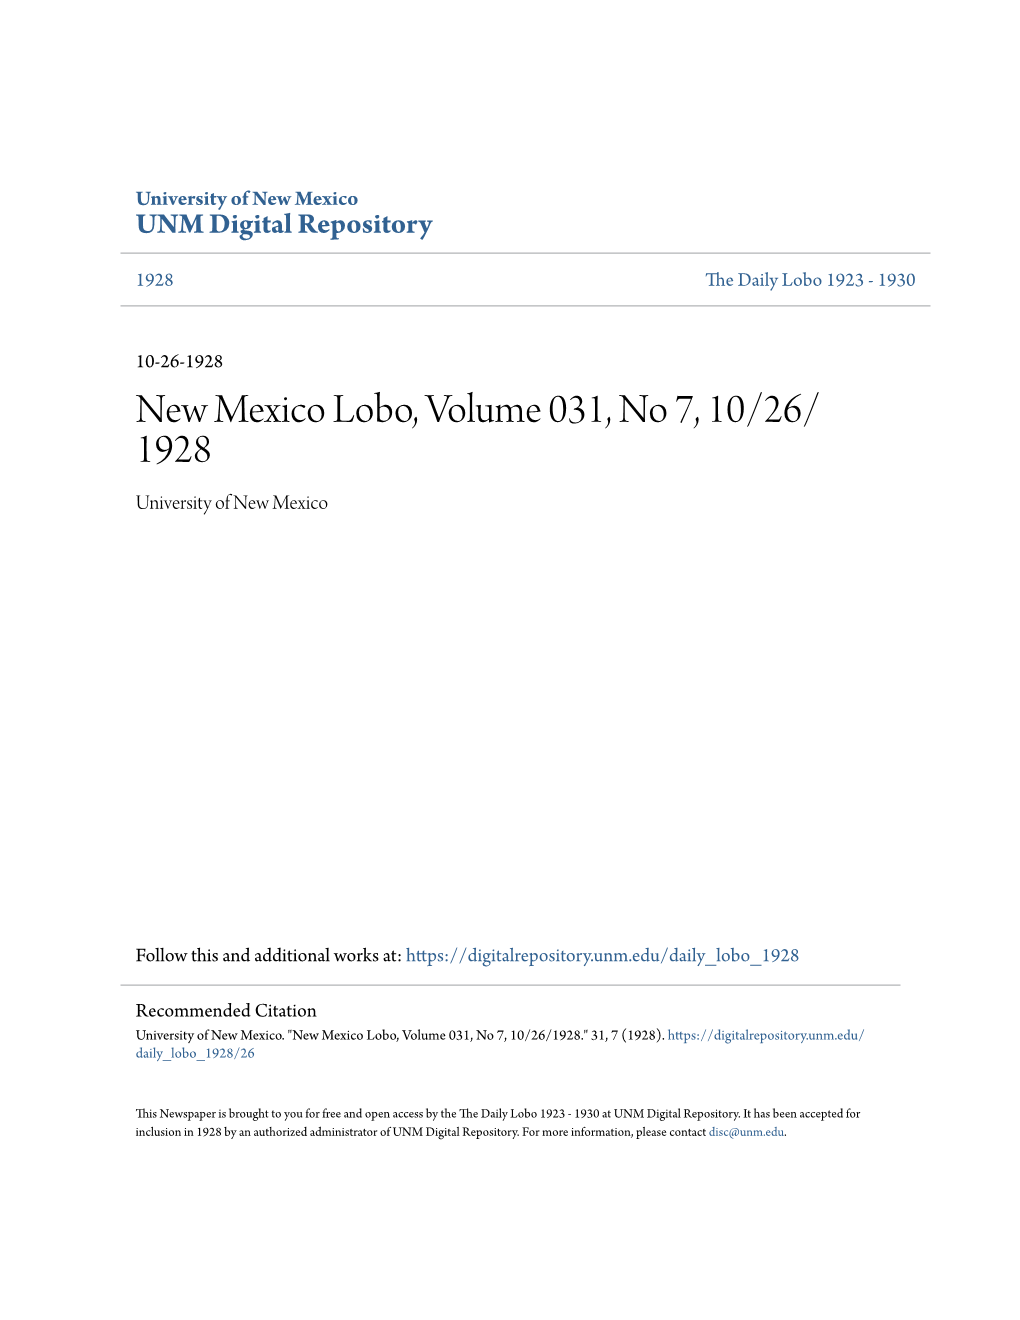 New Mexico Lobo, Volume 031, No 7, 10/26/1928." 31, 7 (1928)